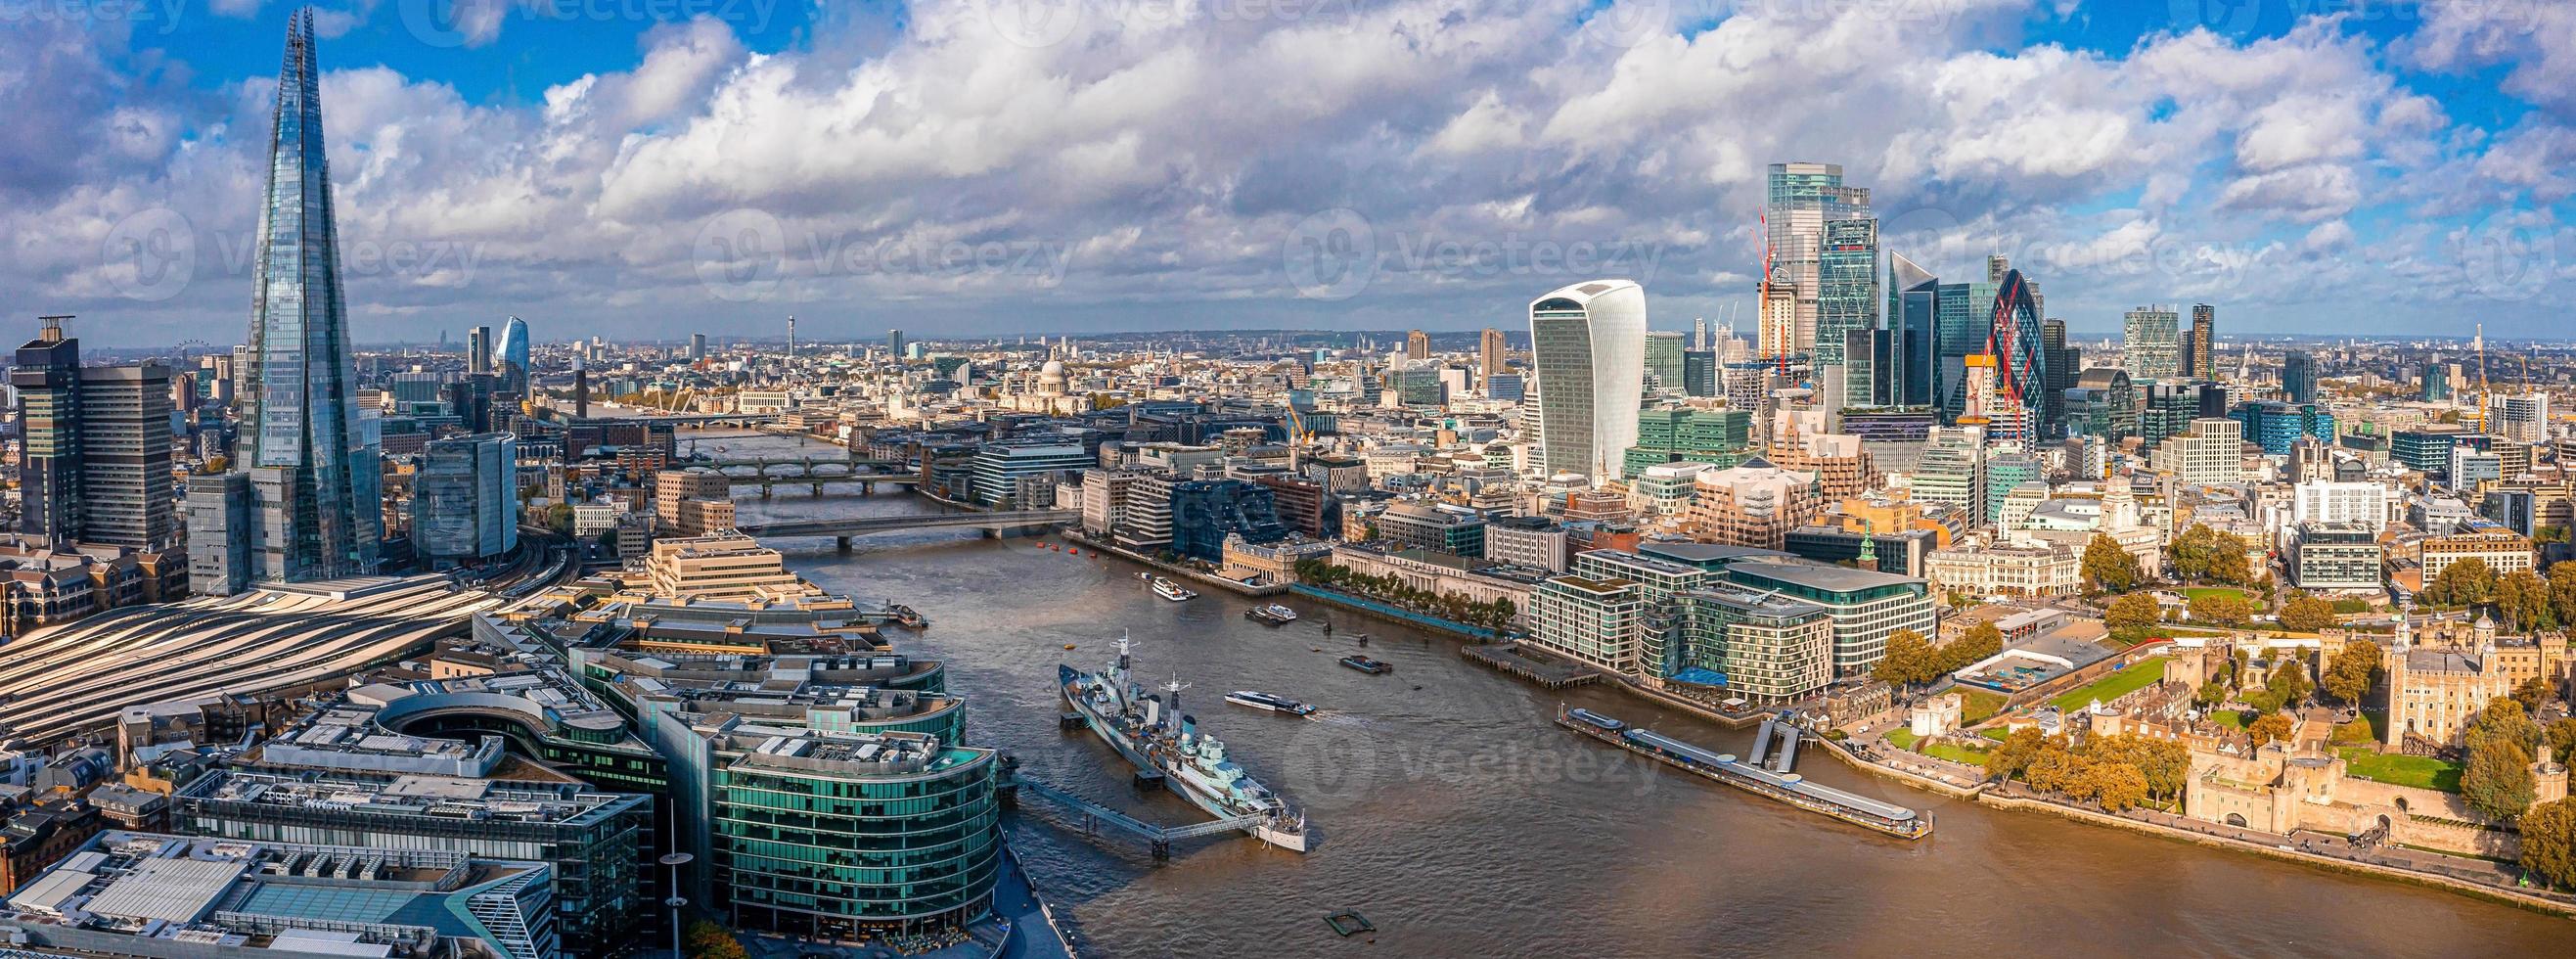 Luftpanoramaszene des Londoner Finanzviertels foto